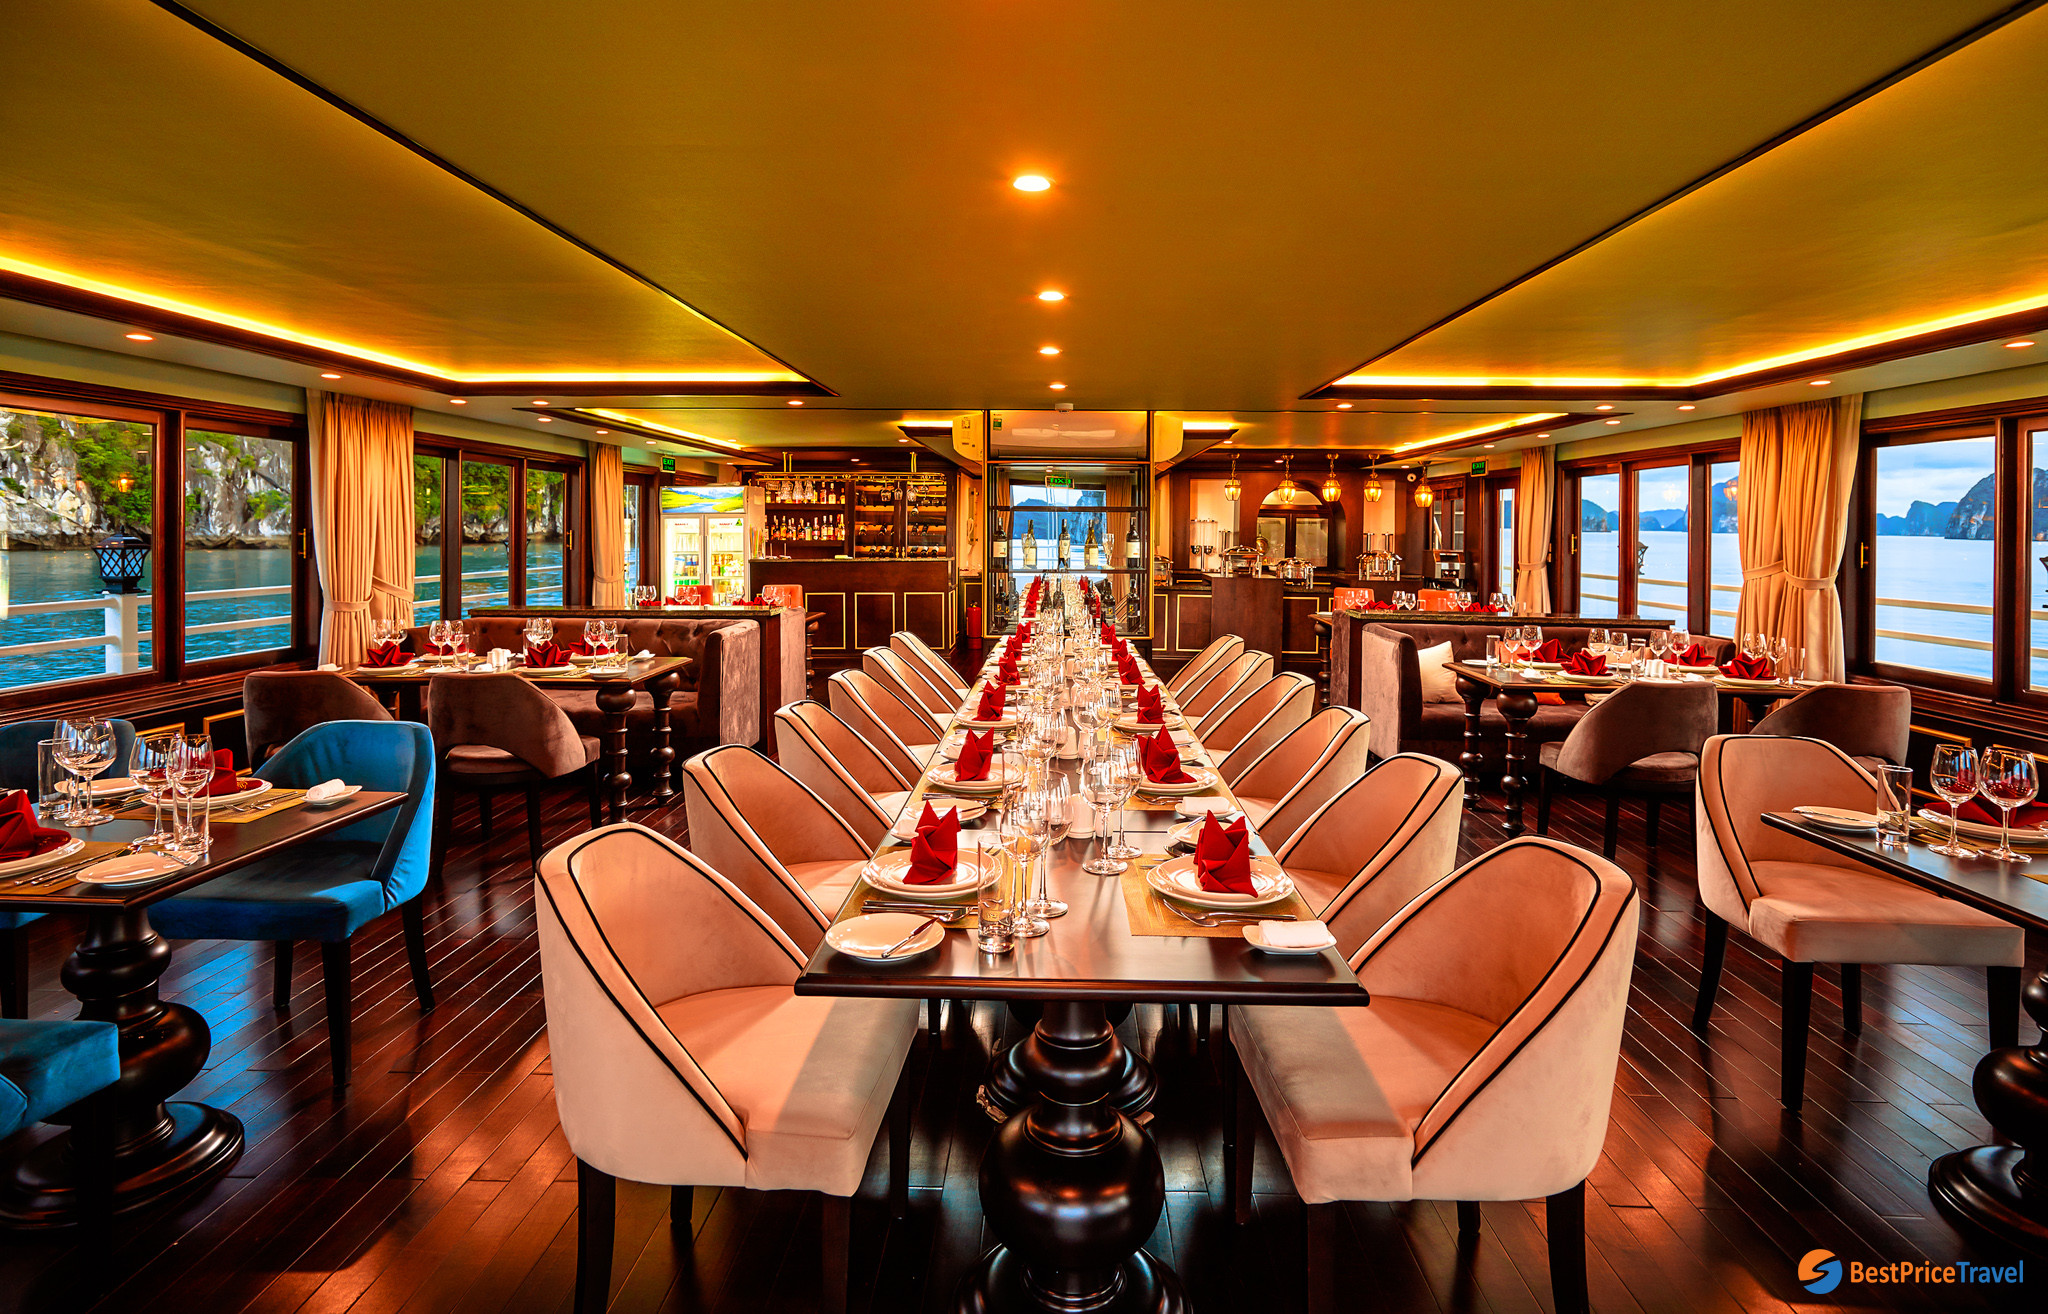 Spacious dining area at Athena Luxury restaurant